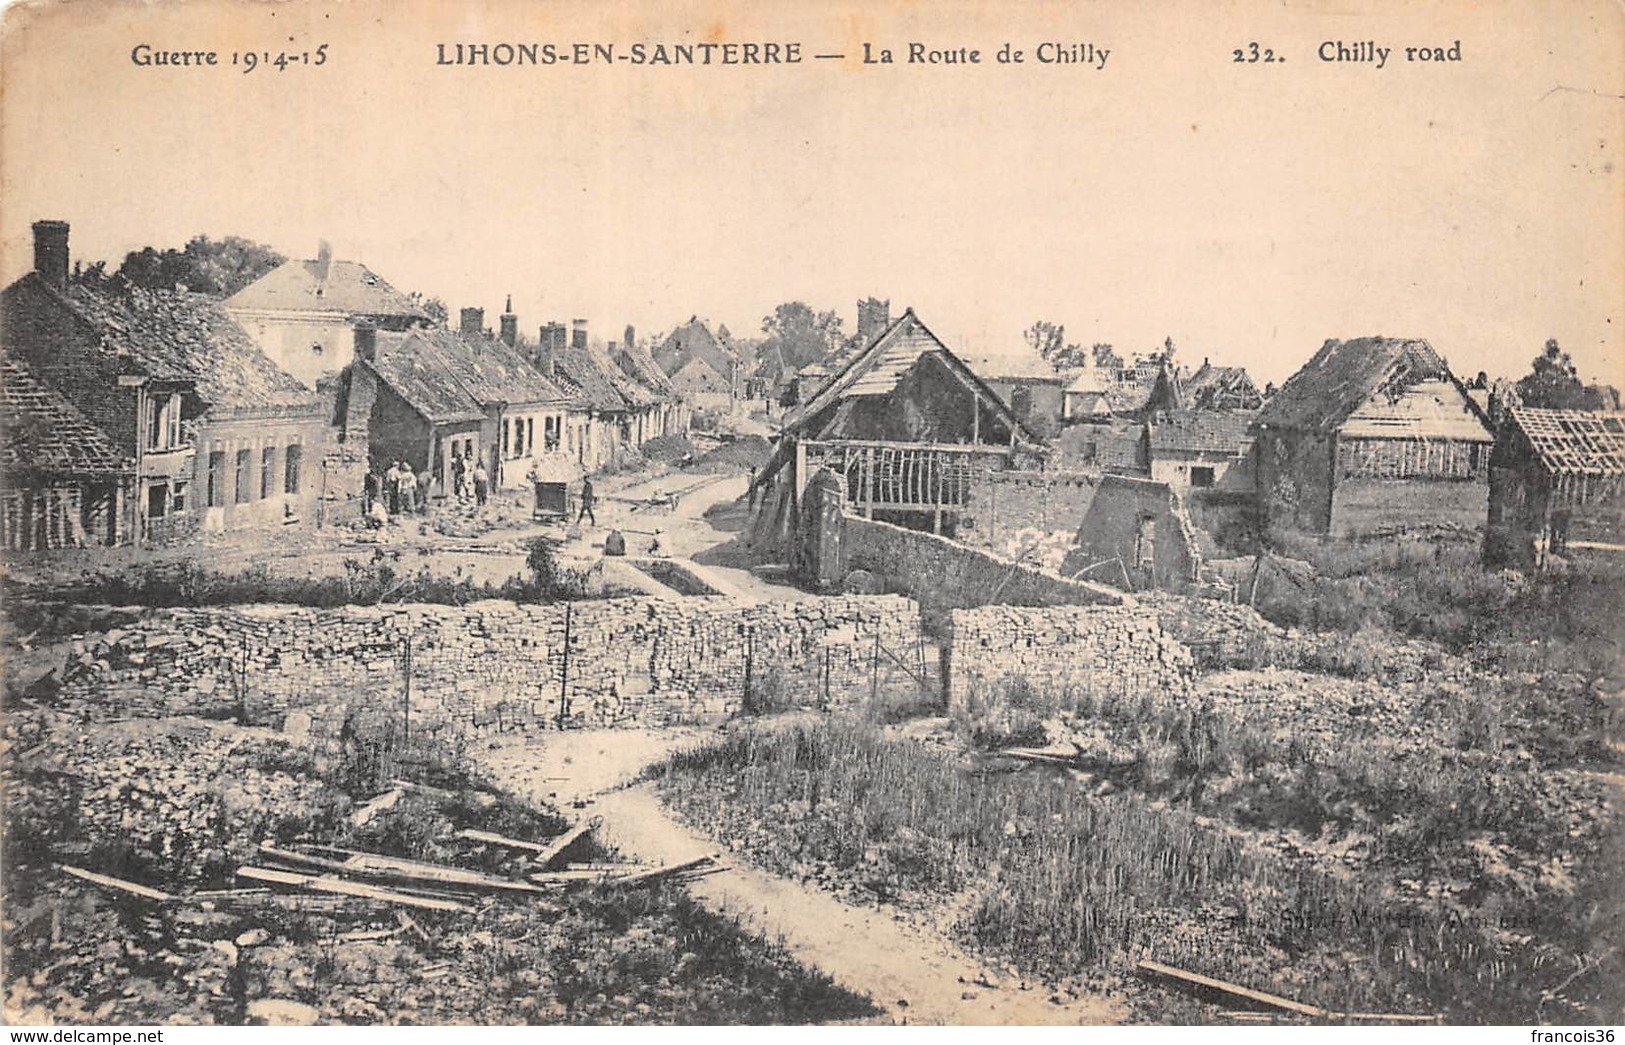 Lot de 13 CPA de Lihons en Santerre (80) Guerre 14 - 18